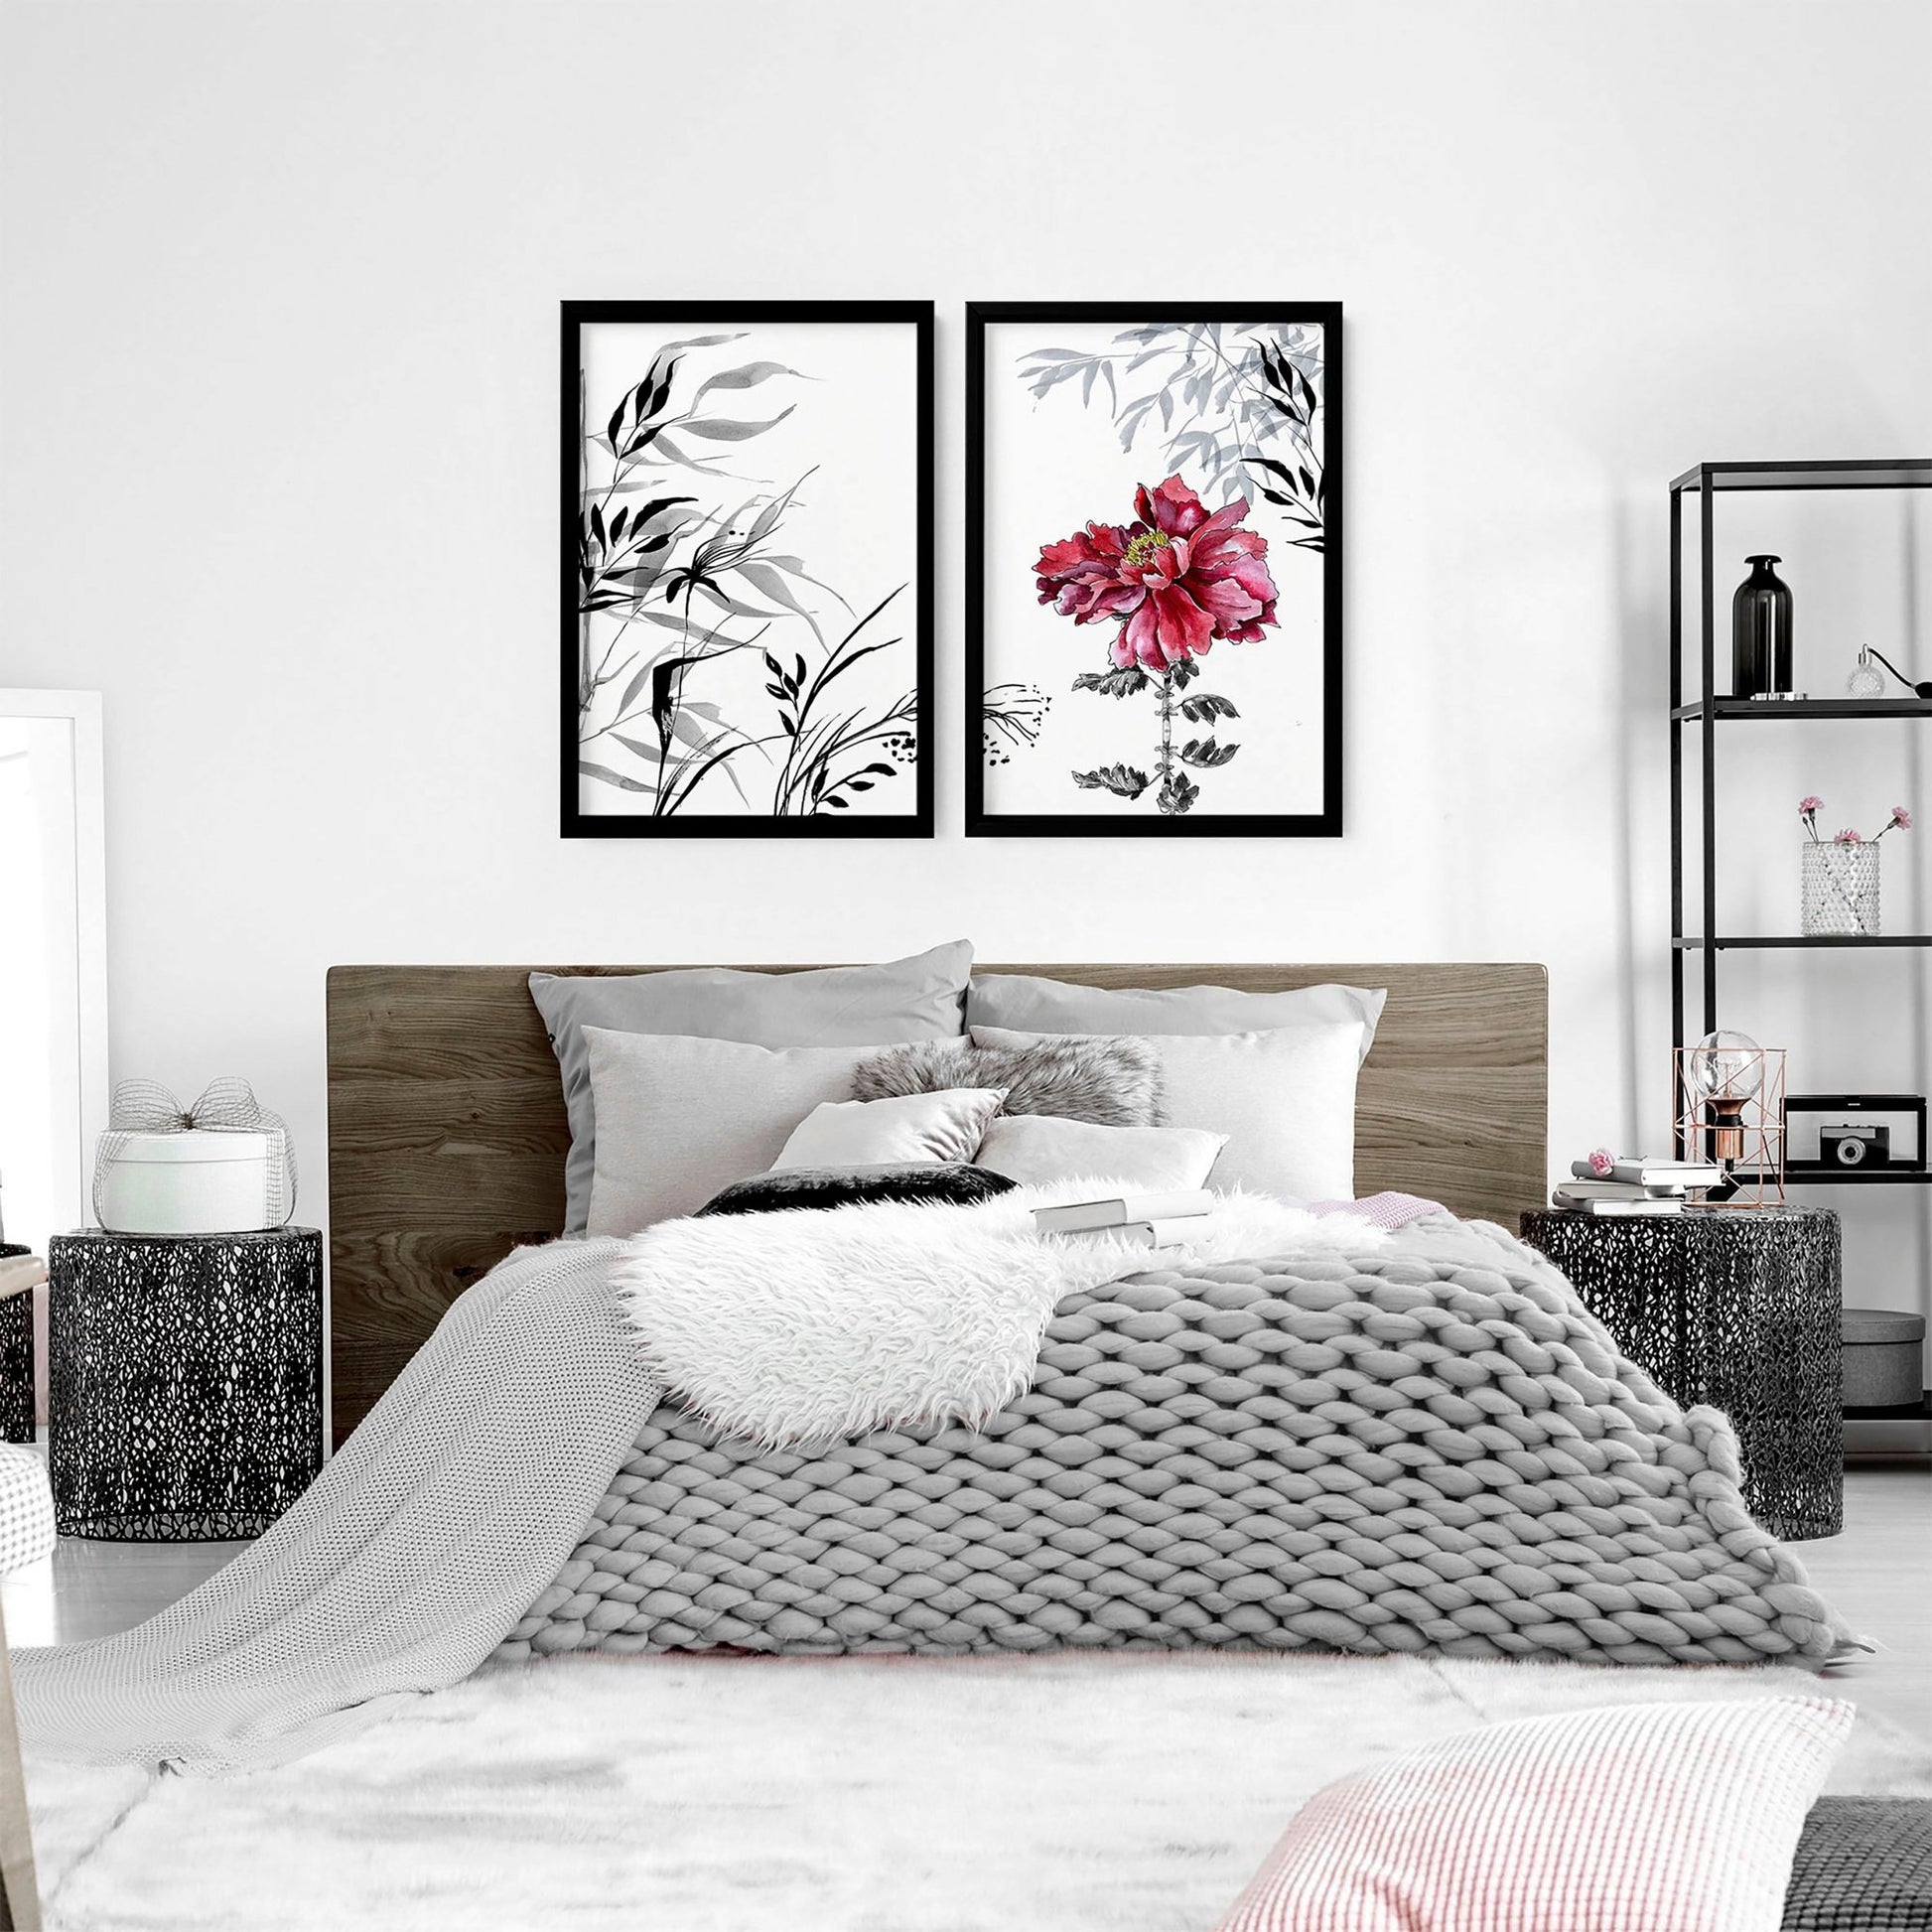 Japanese Art decor for walls | set of 2 wall art prints for bedroom